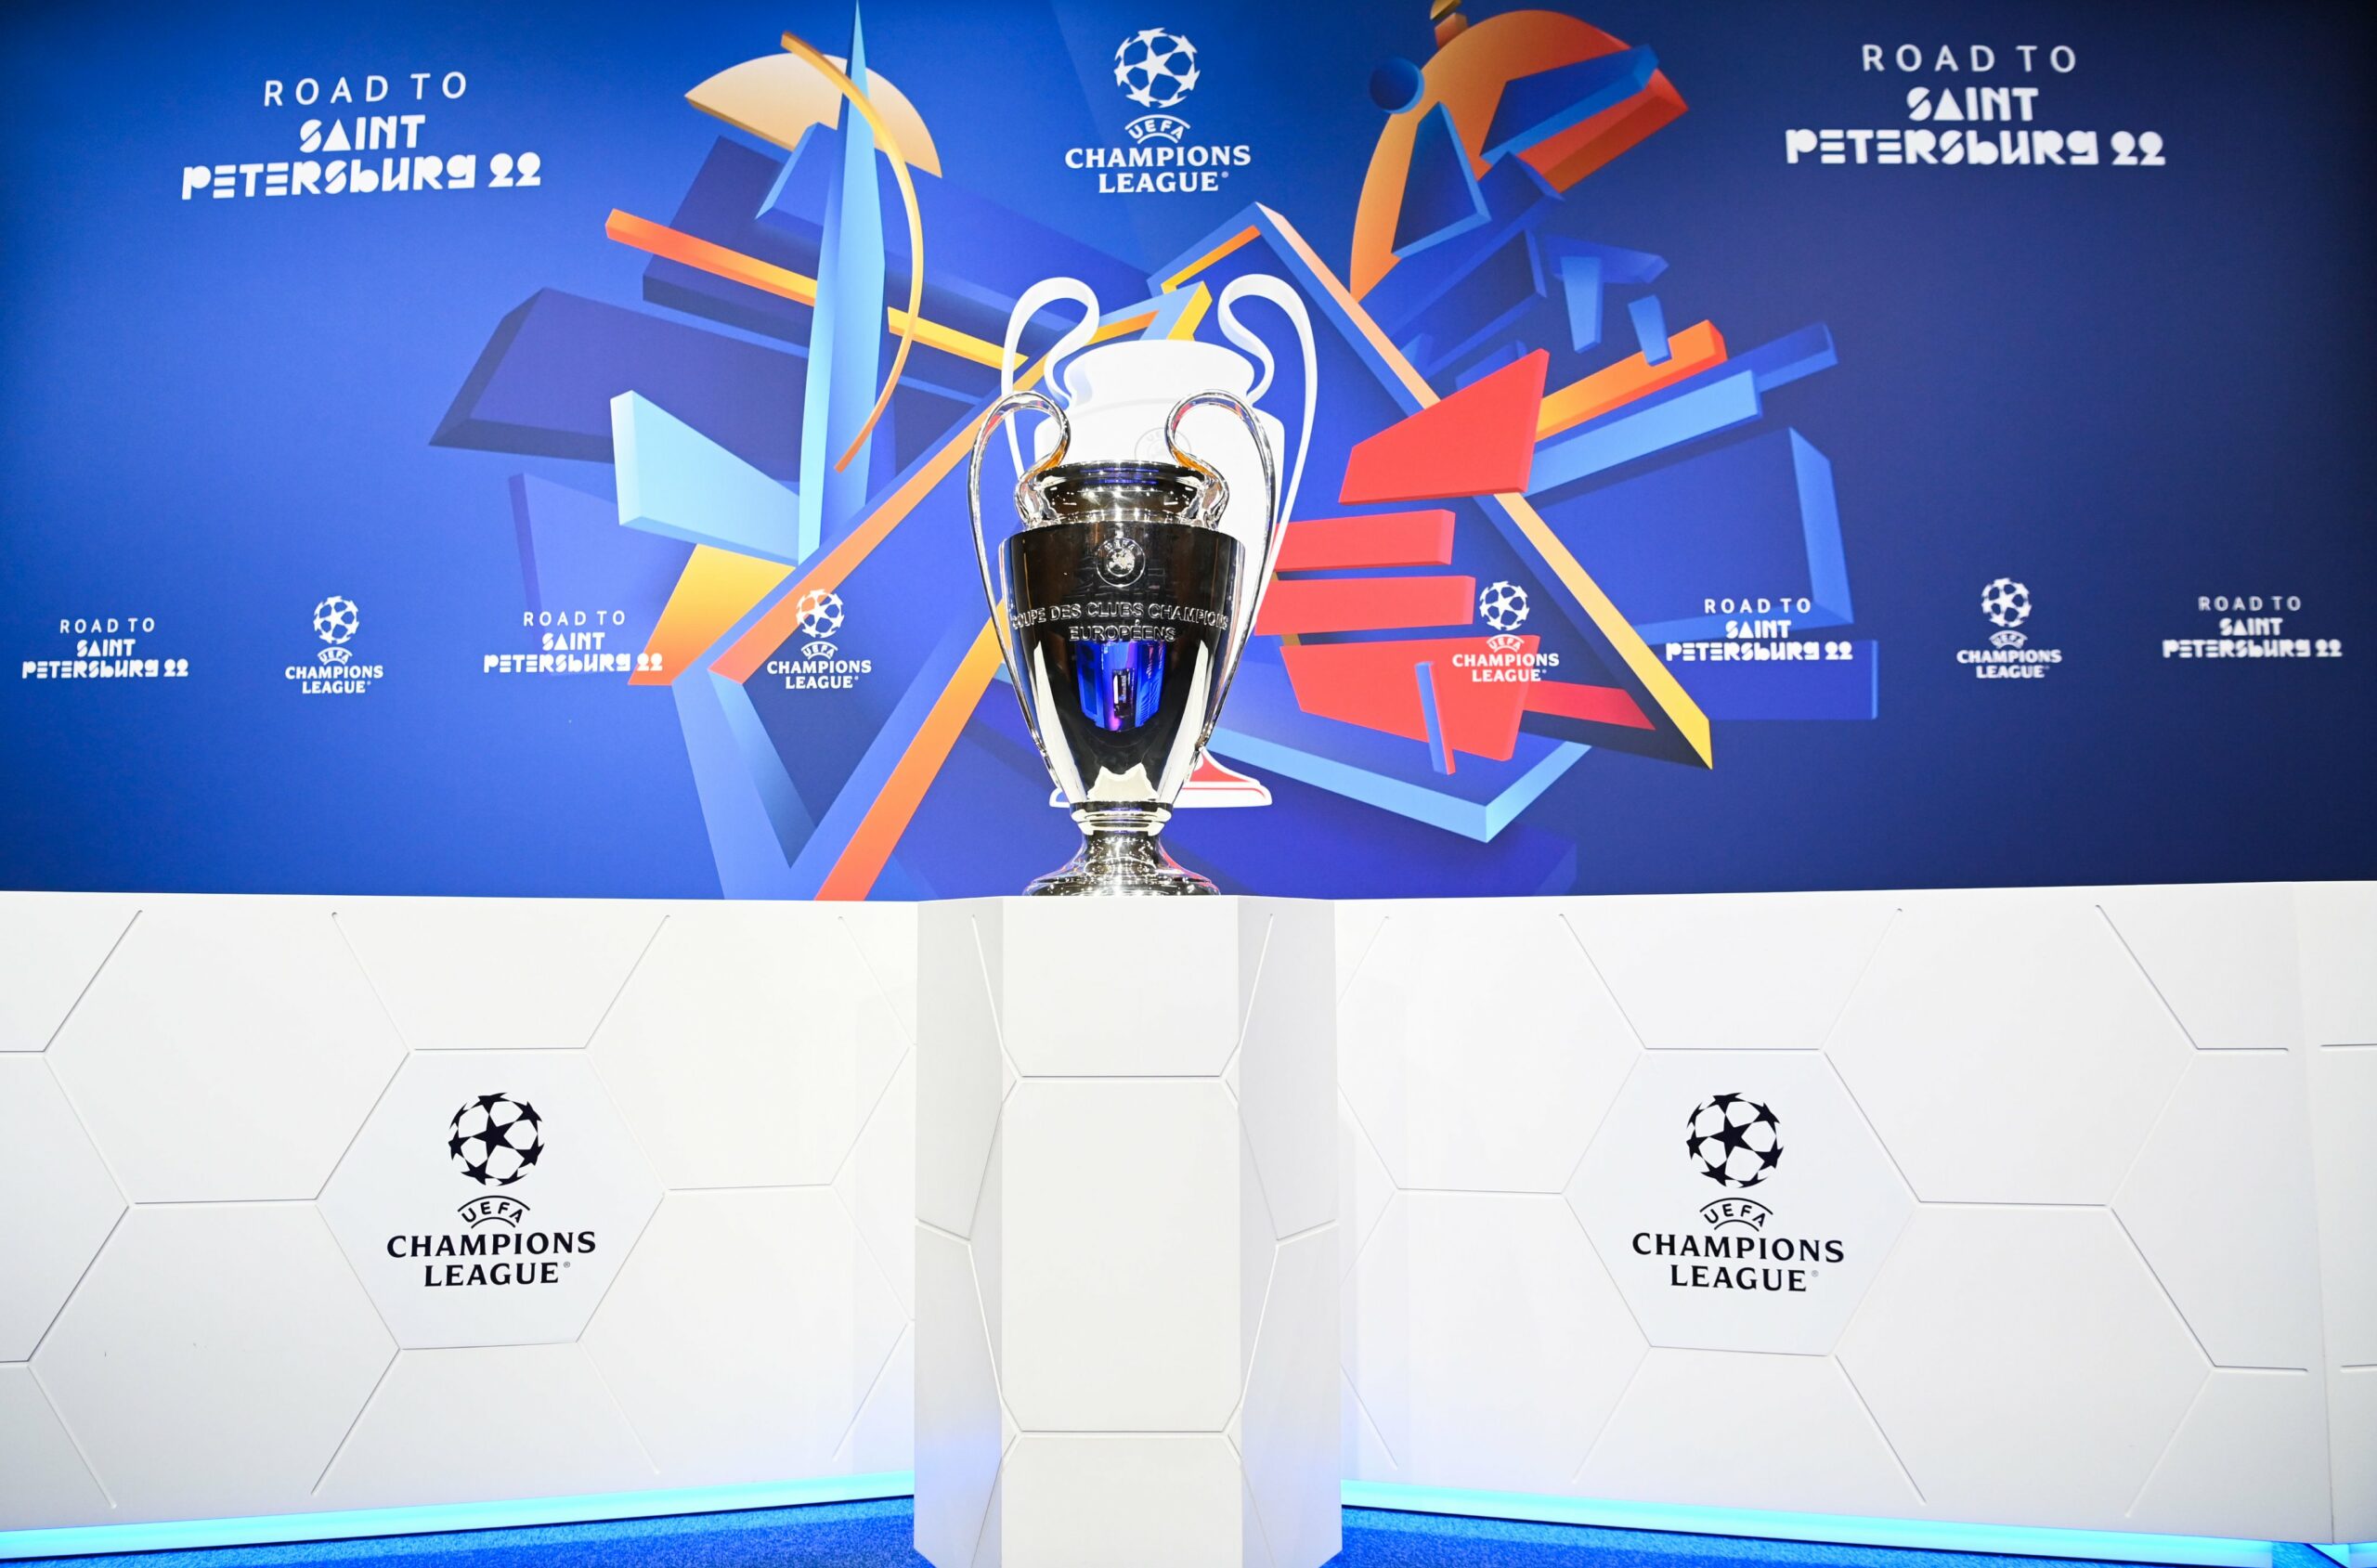 Taça da Champions League sendo exibida